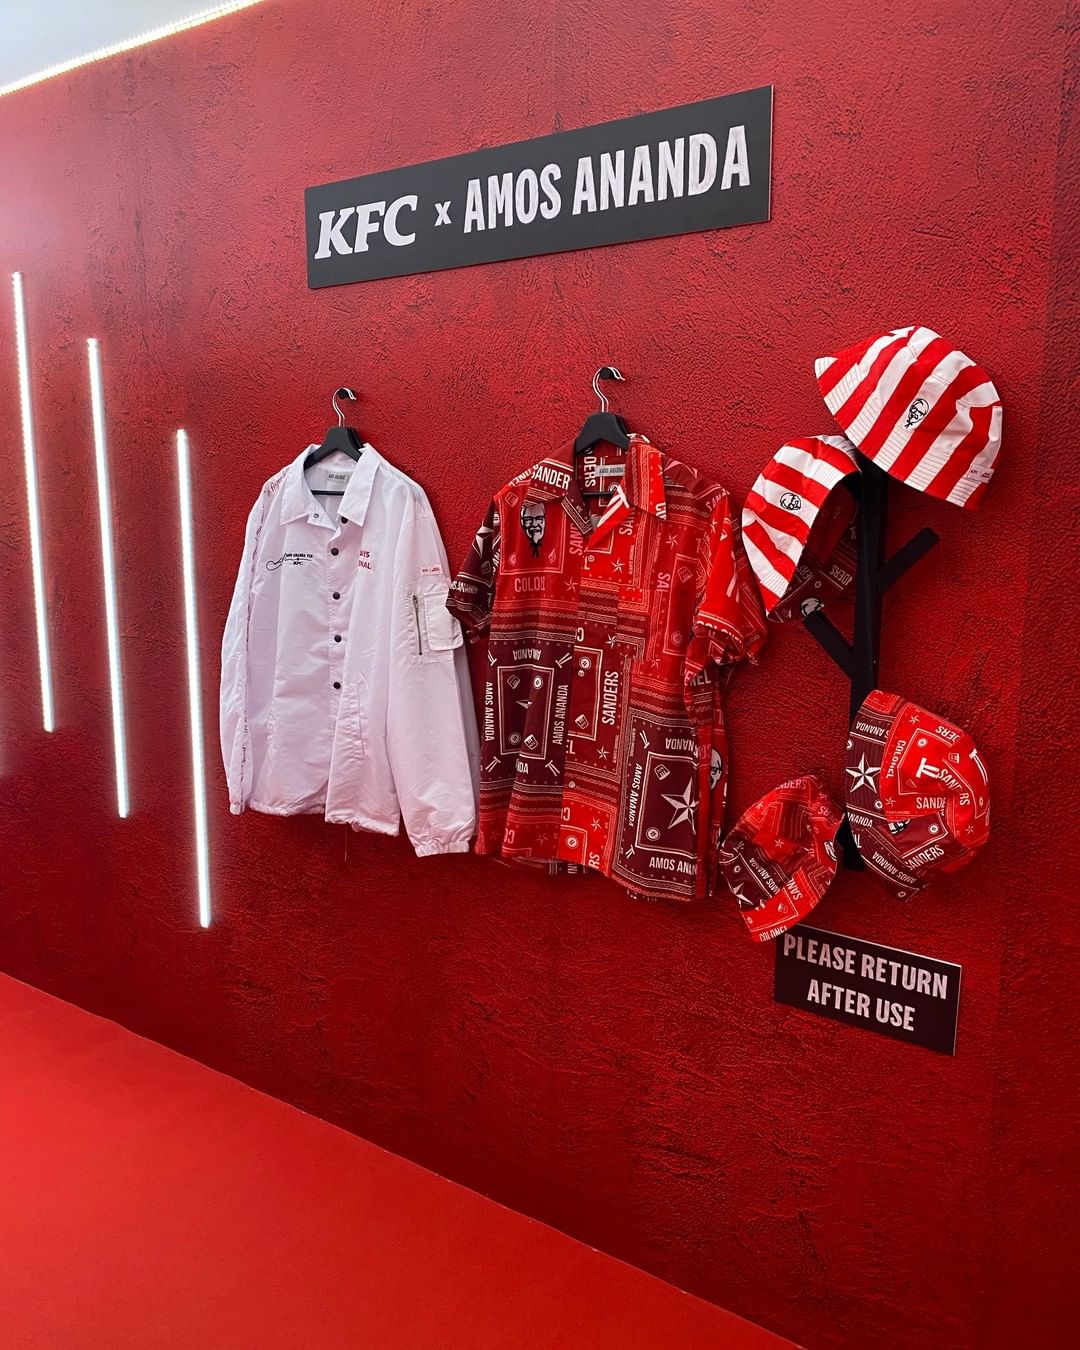 KFC pop-up vivocity - KFC x AMOS ANANDA